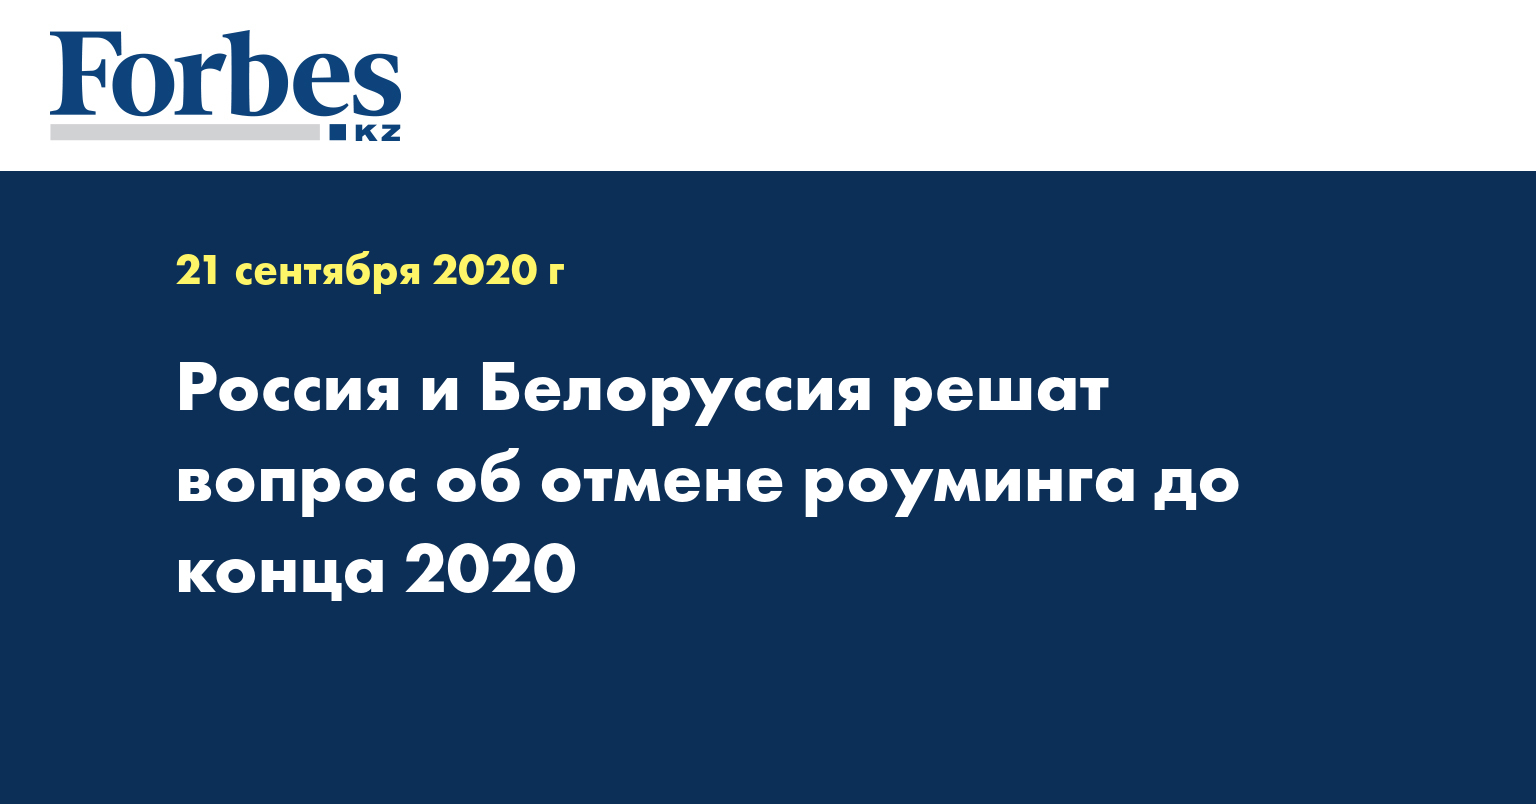 Россия и Белоруссия решат вопрос об отмене роуминга до конца 2020 